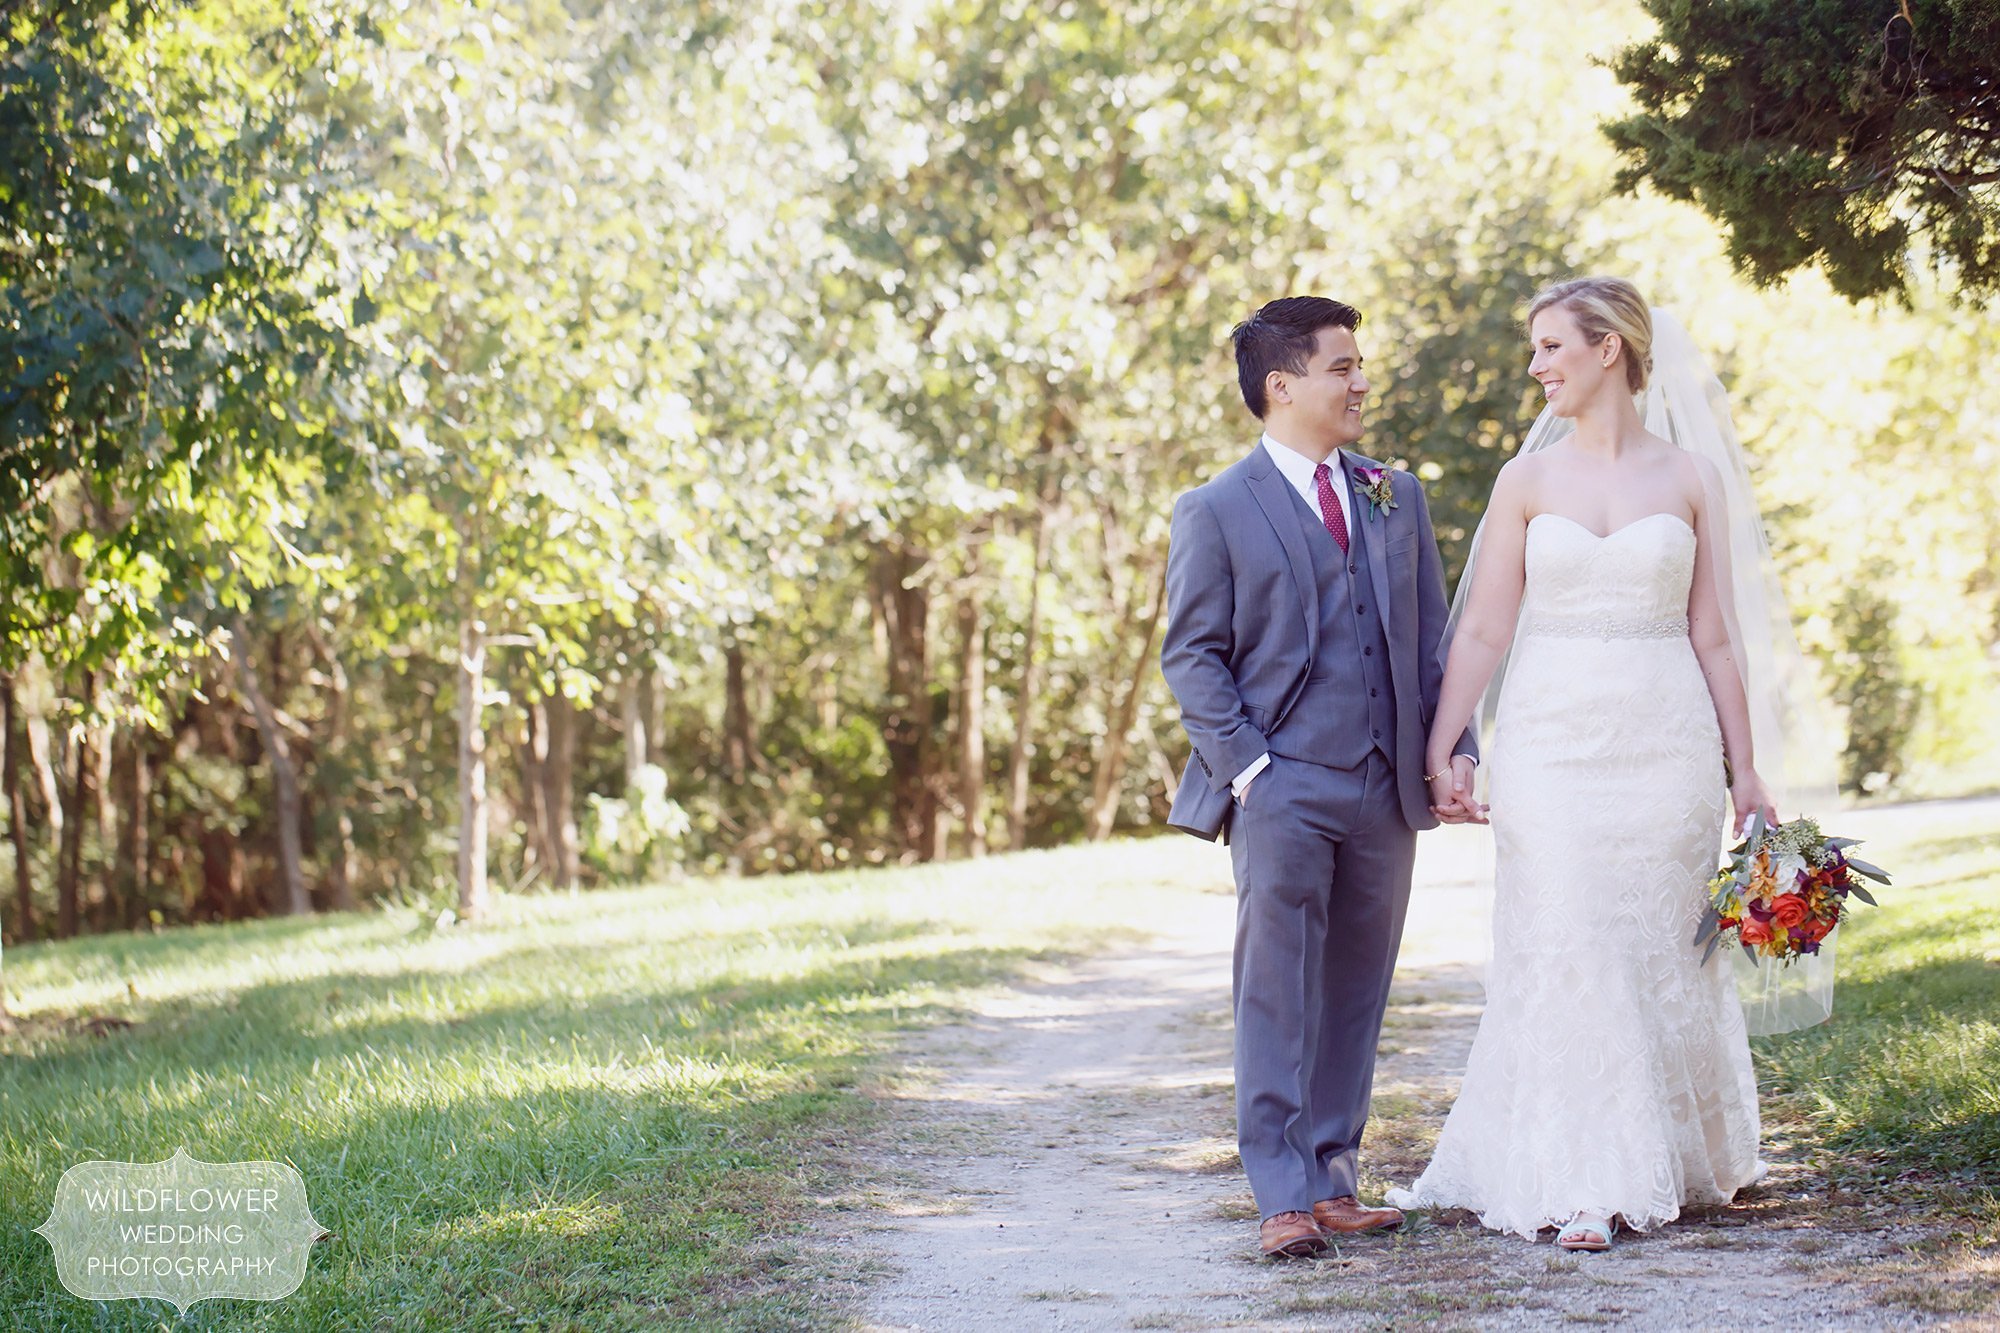 Candid wedding portrait of bride and groom walking down a path at their Missouri backyard wedding.